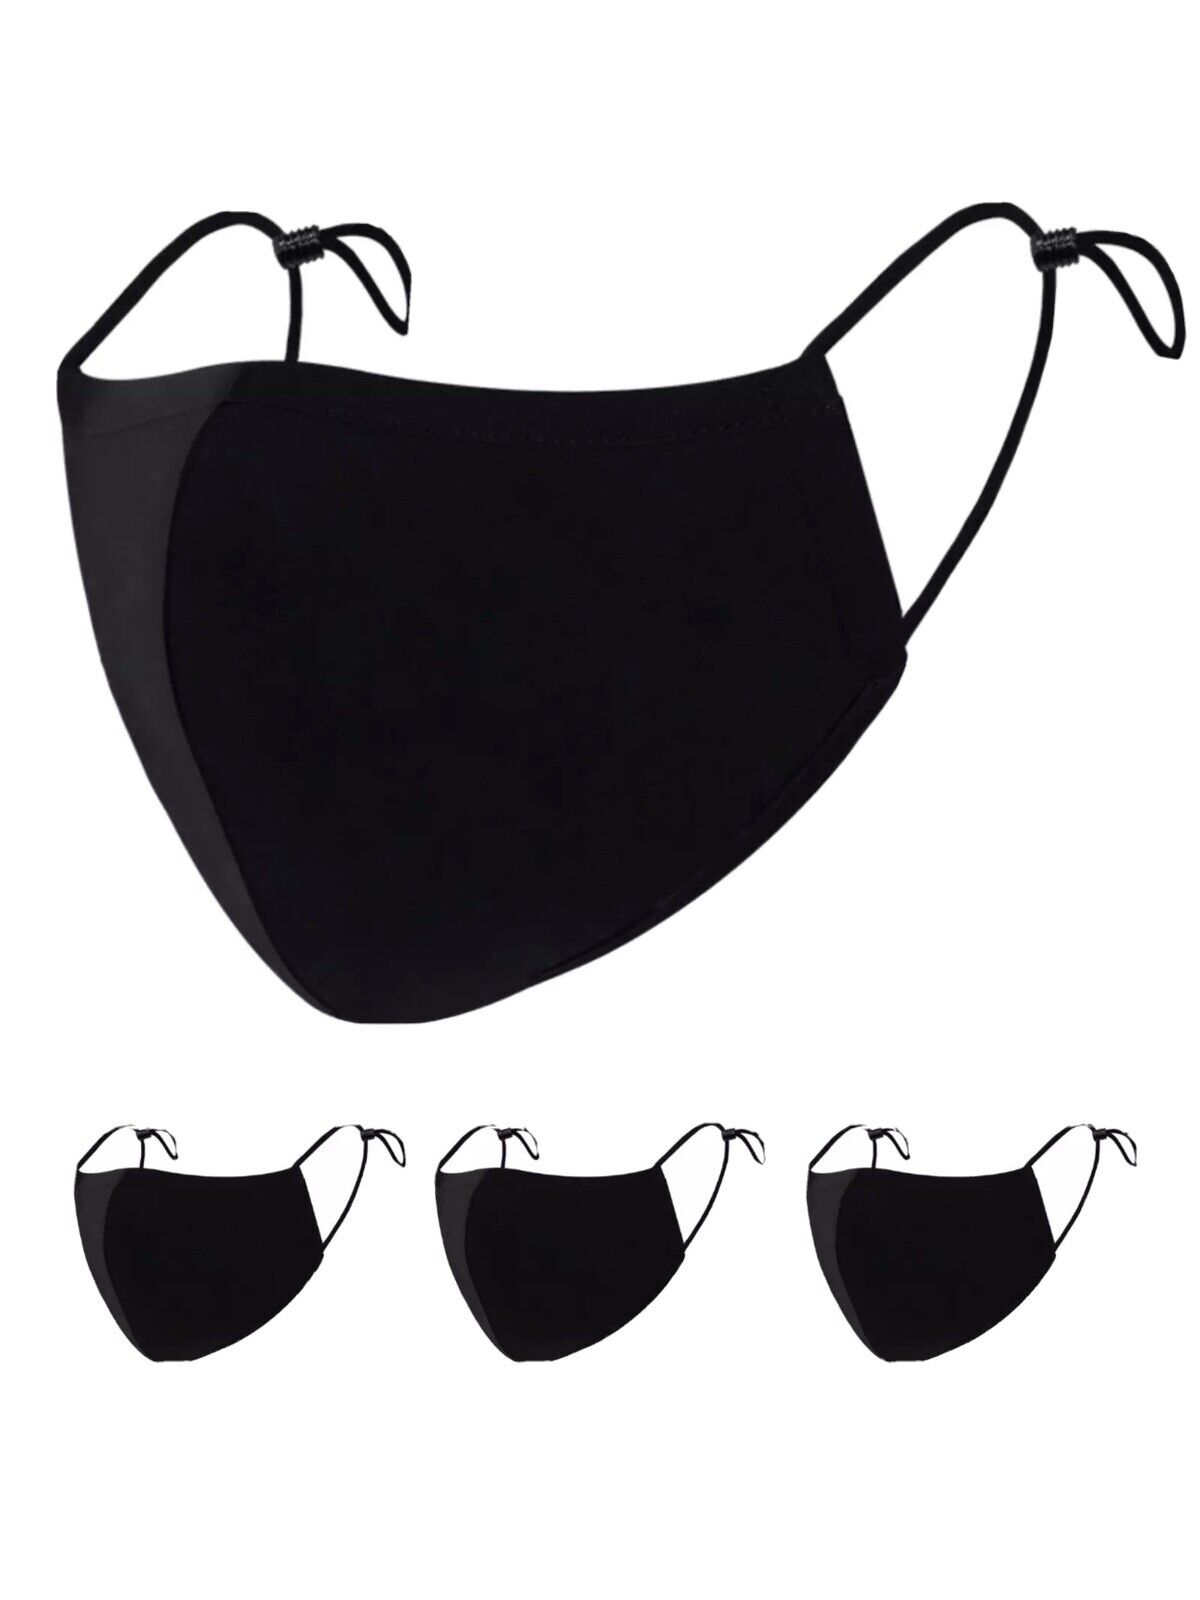 4 Face Masks Black Cotton Reusable Adult Mask Adjustable Elastic Loops Washable  ATKCITYSHOP - фотография #2